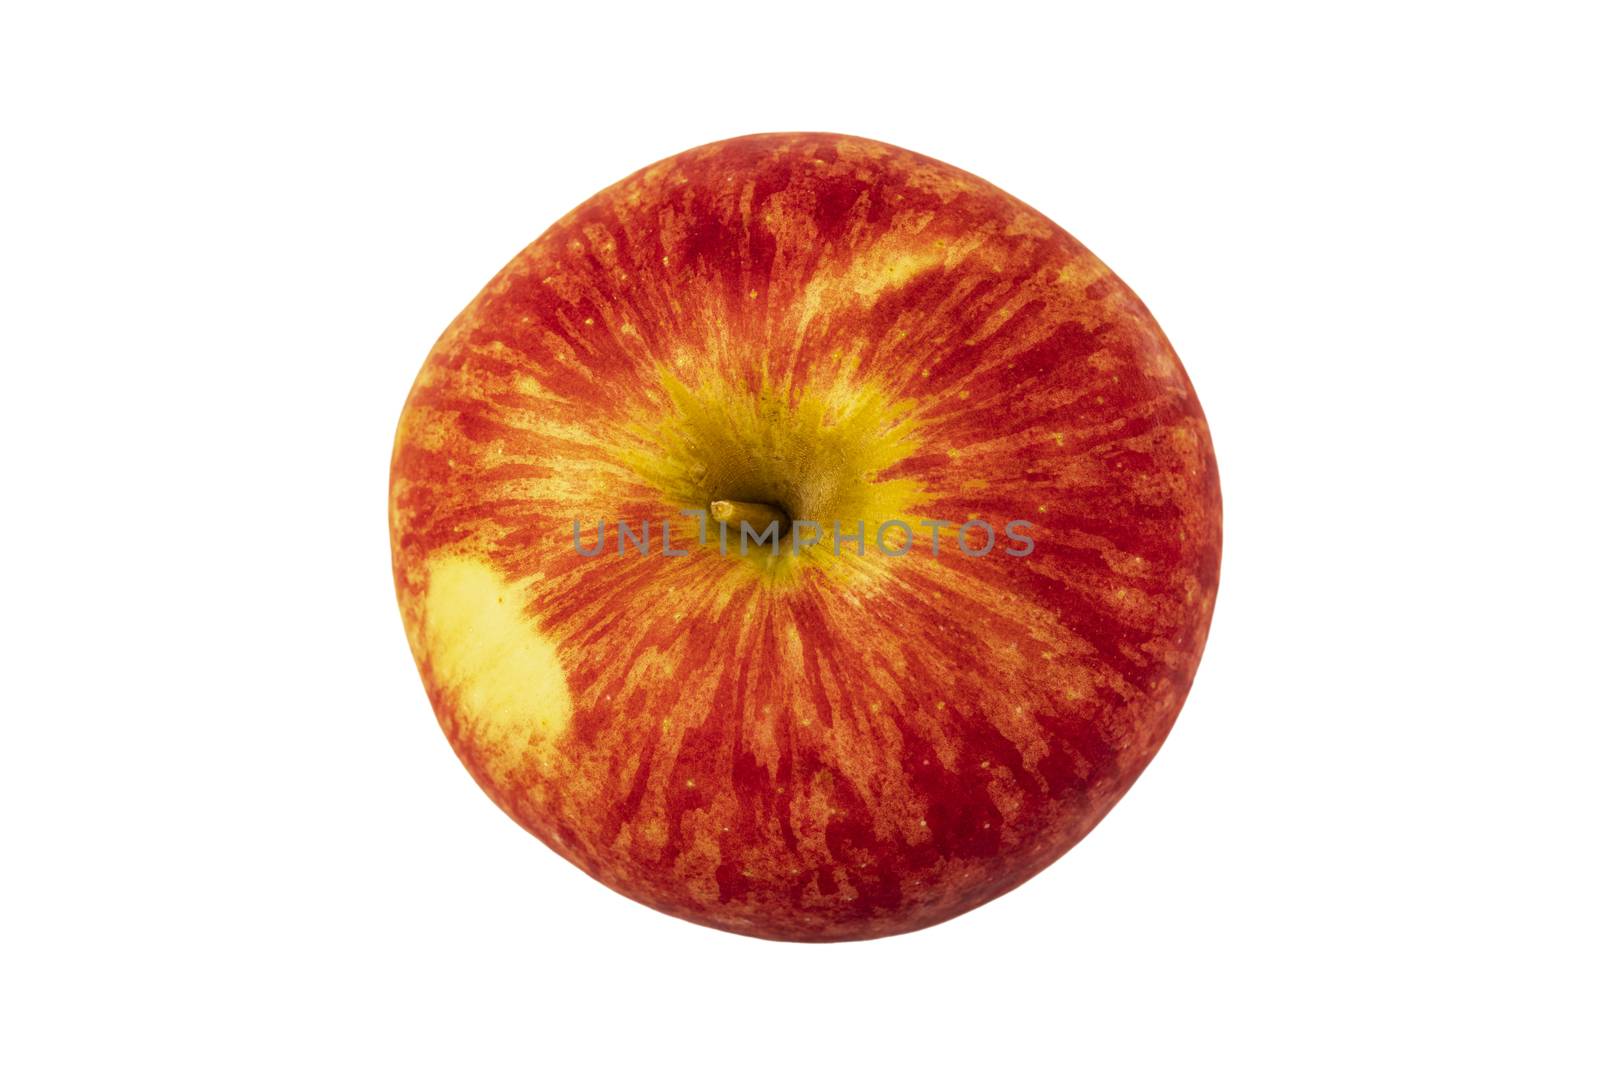 Closeup of gala apple on white background.